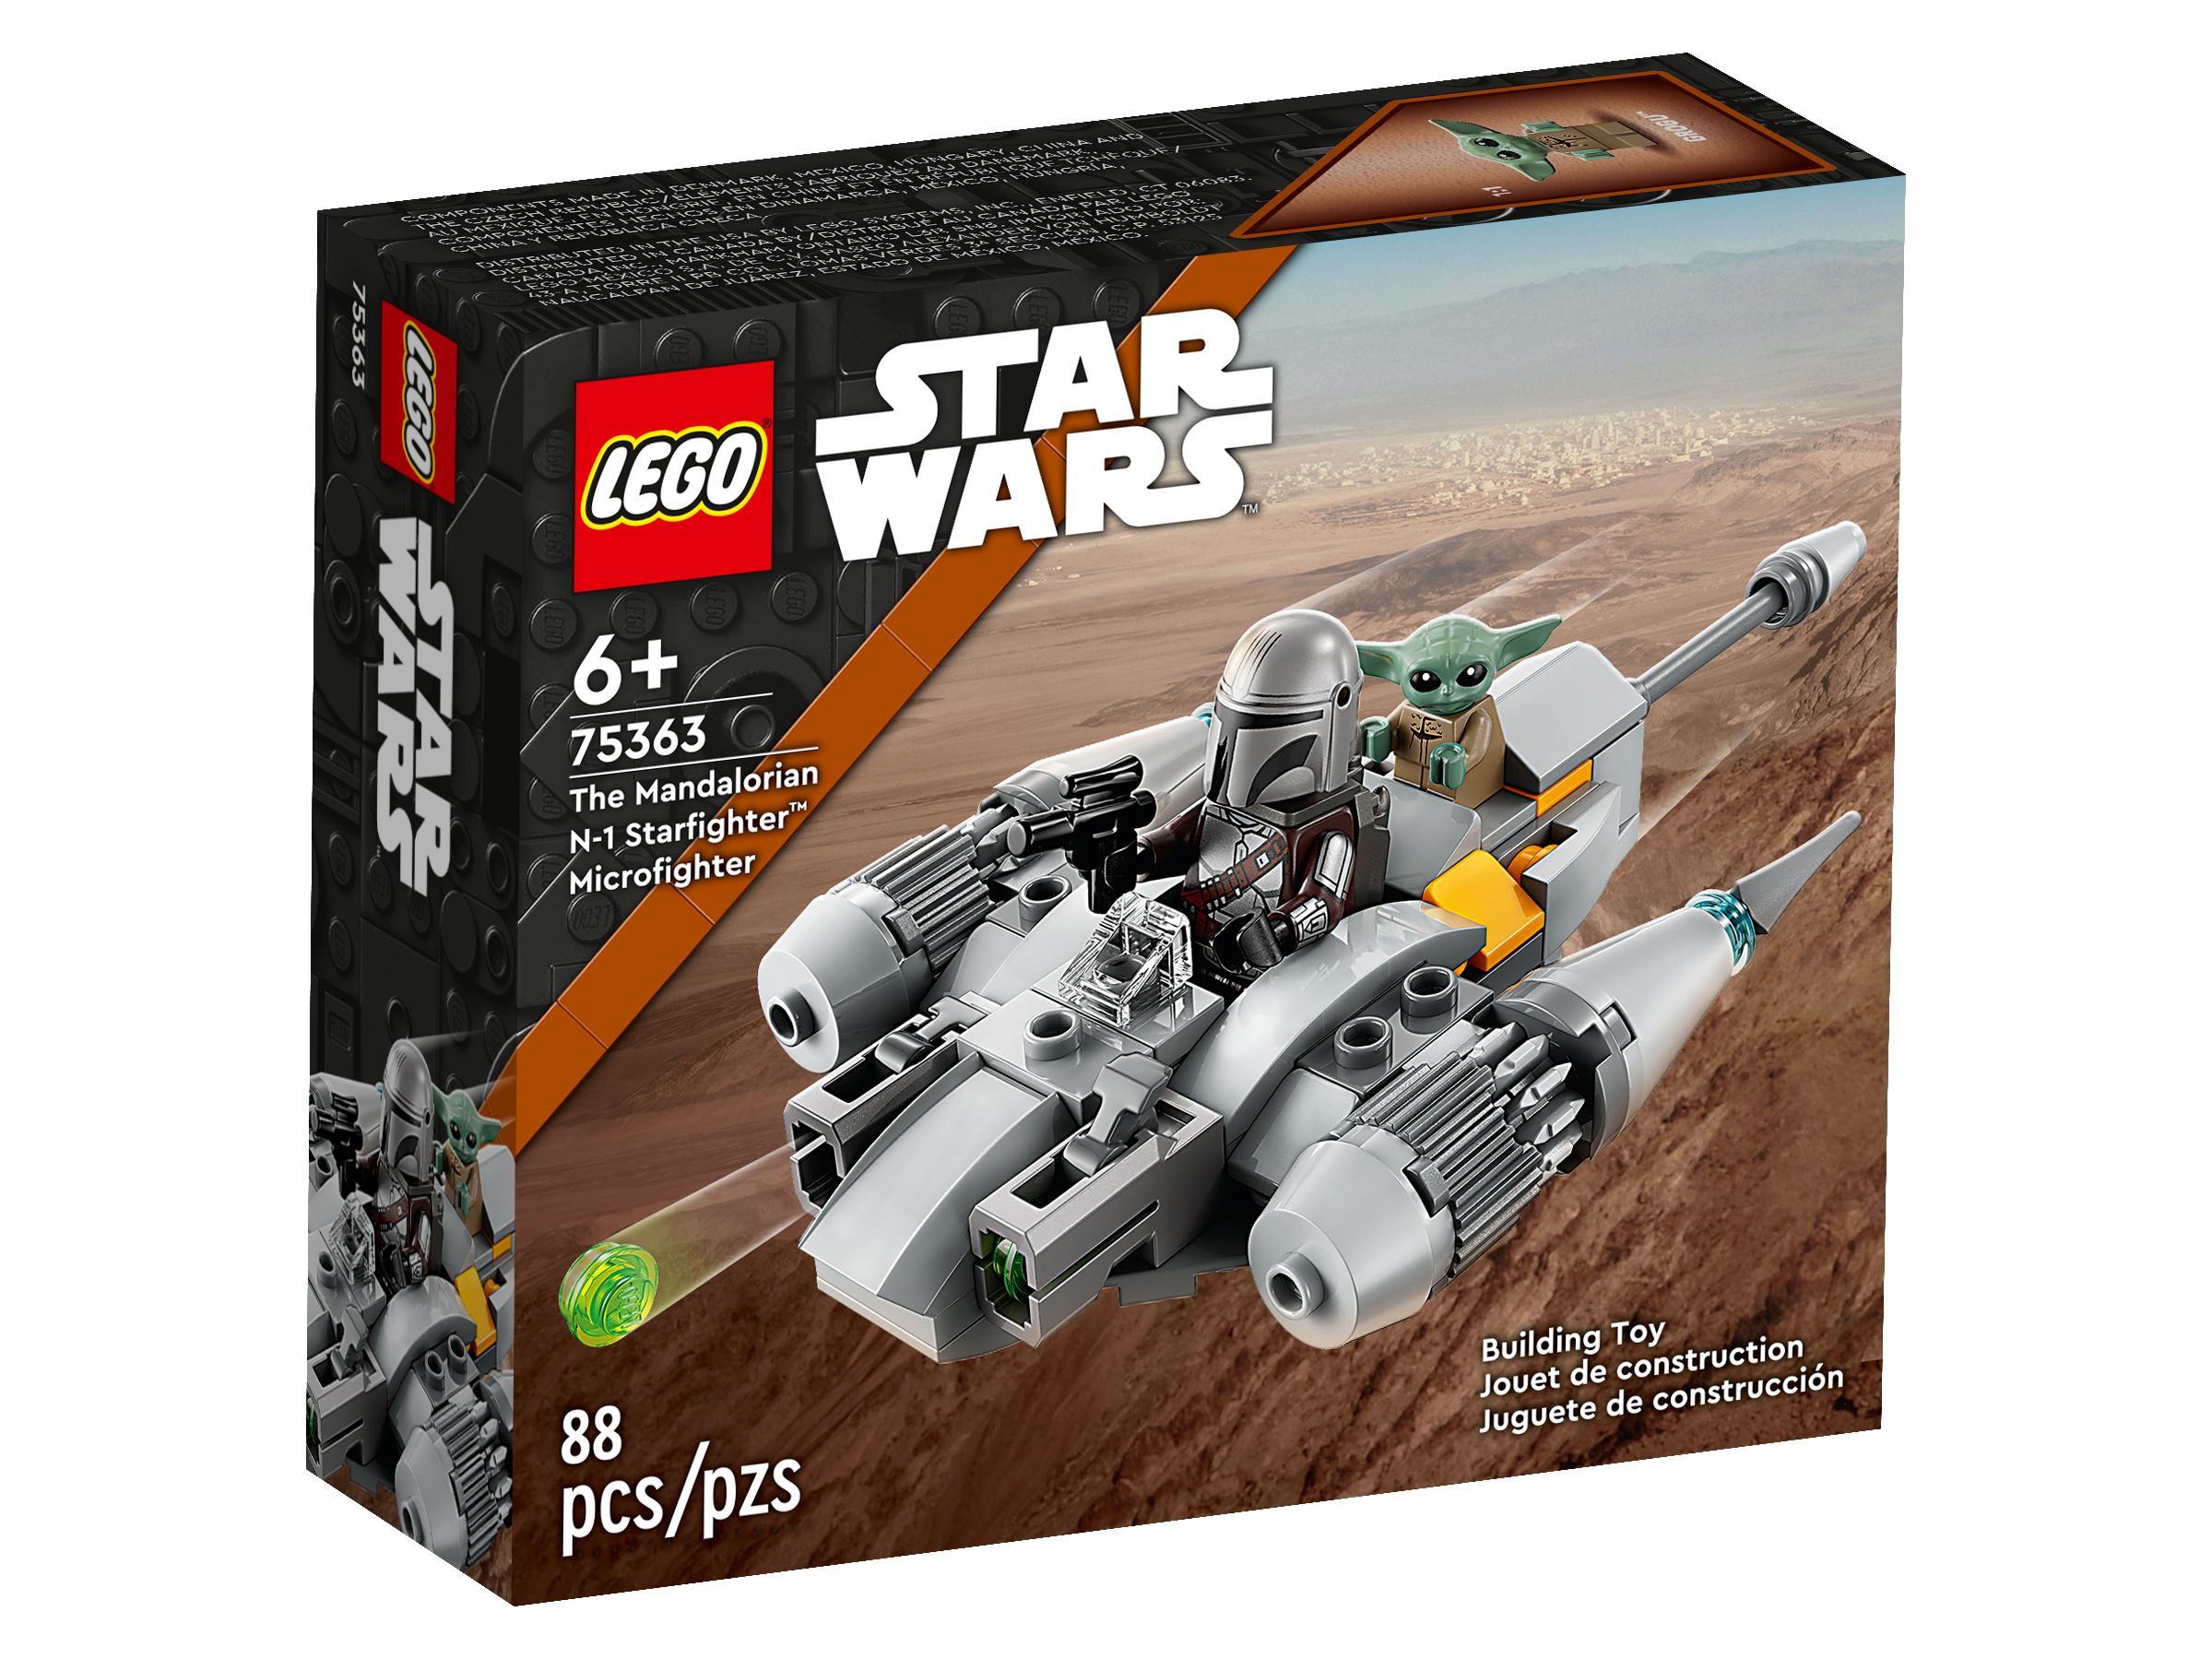 LEGO Star Wars 75363 N-1 Starfighter™ des Mandalorianers – Microfighter LEGO_75363_Box1_v39.jpg